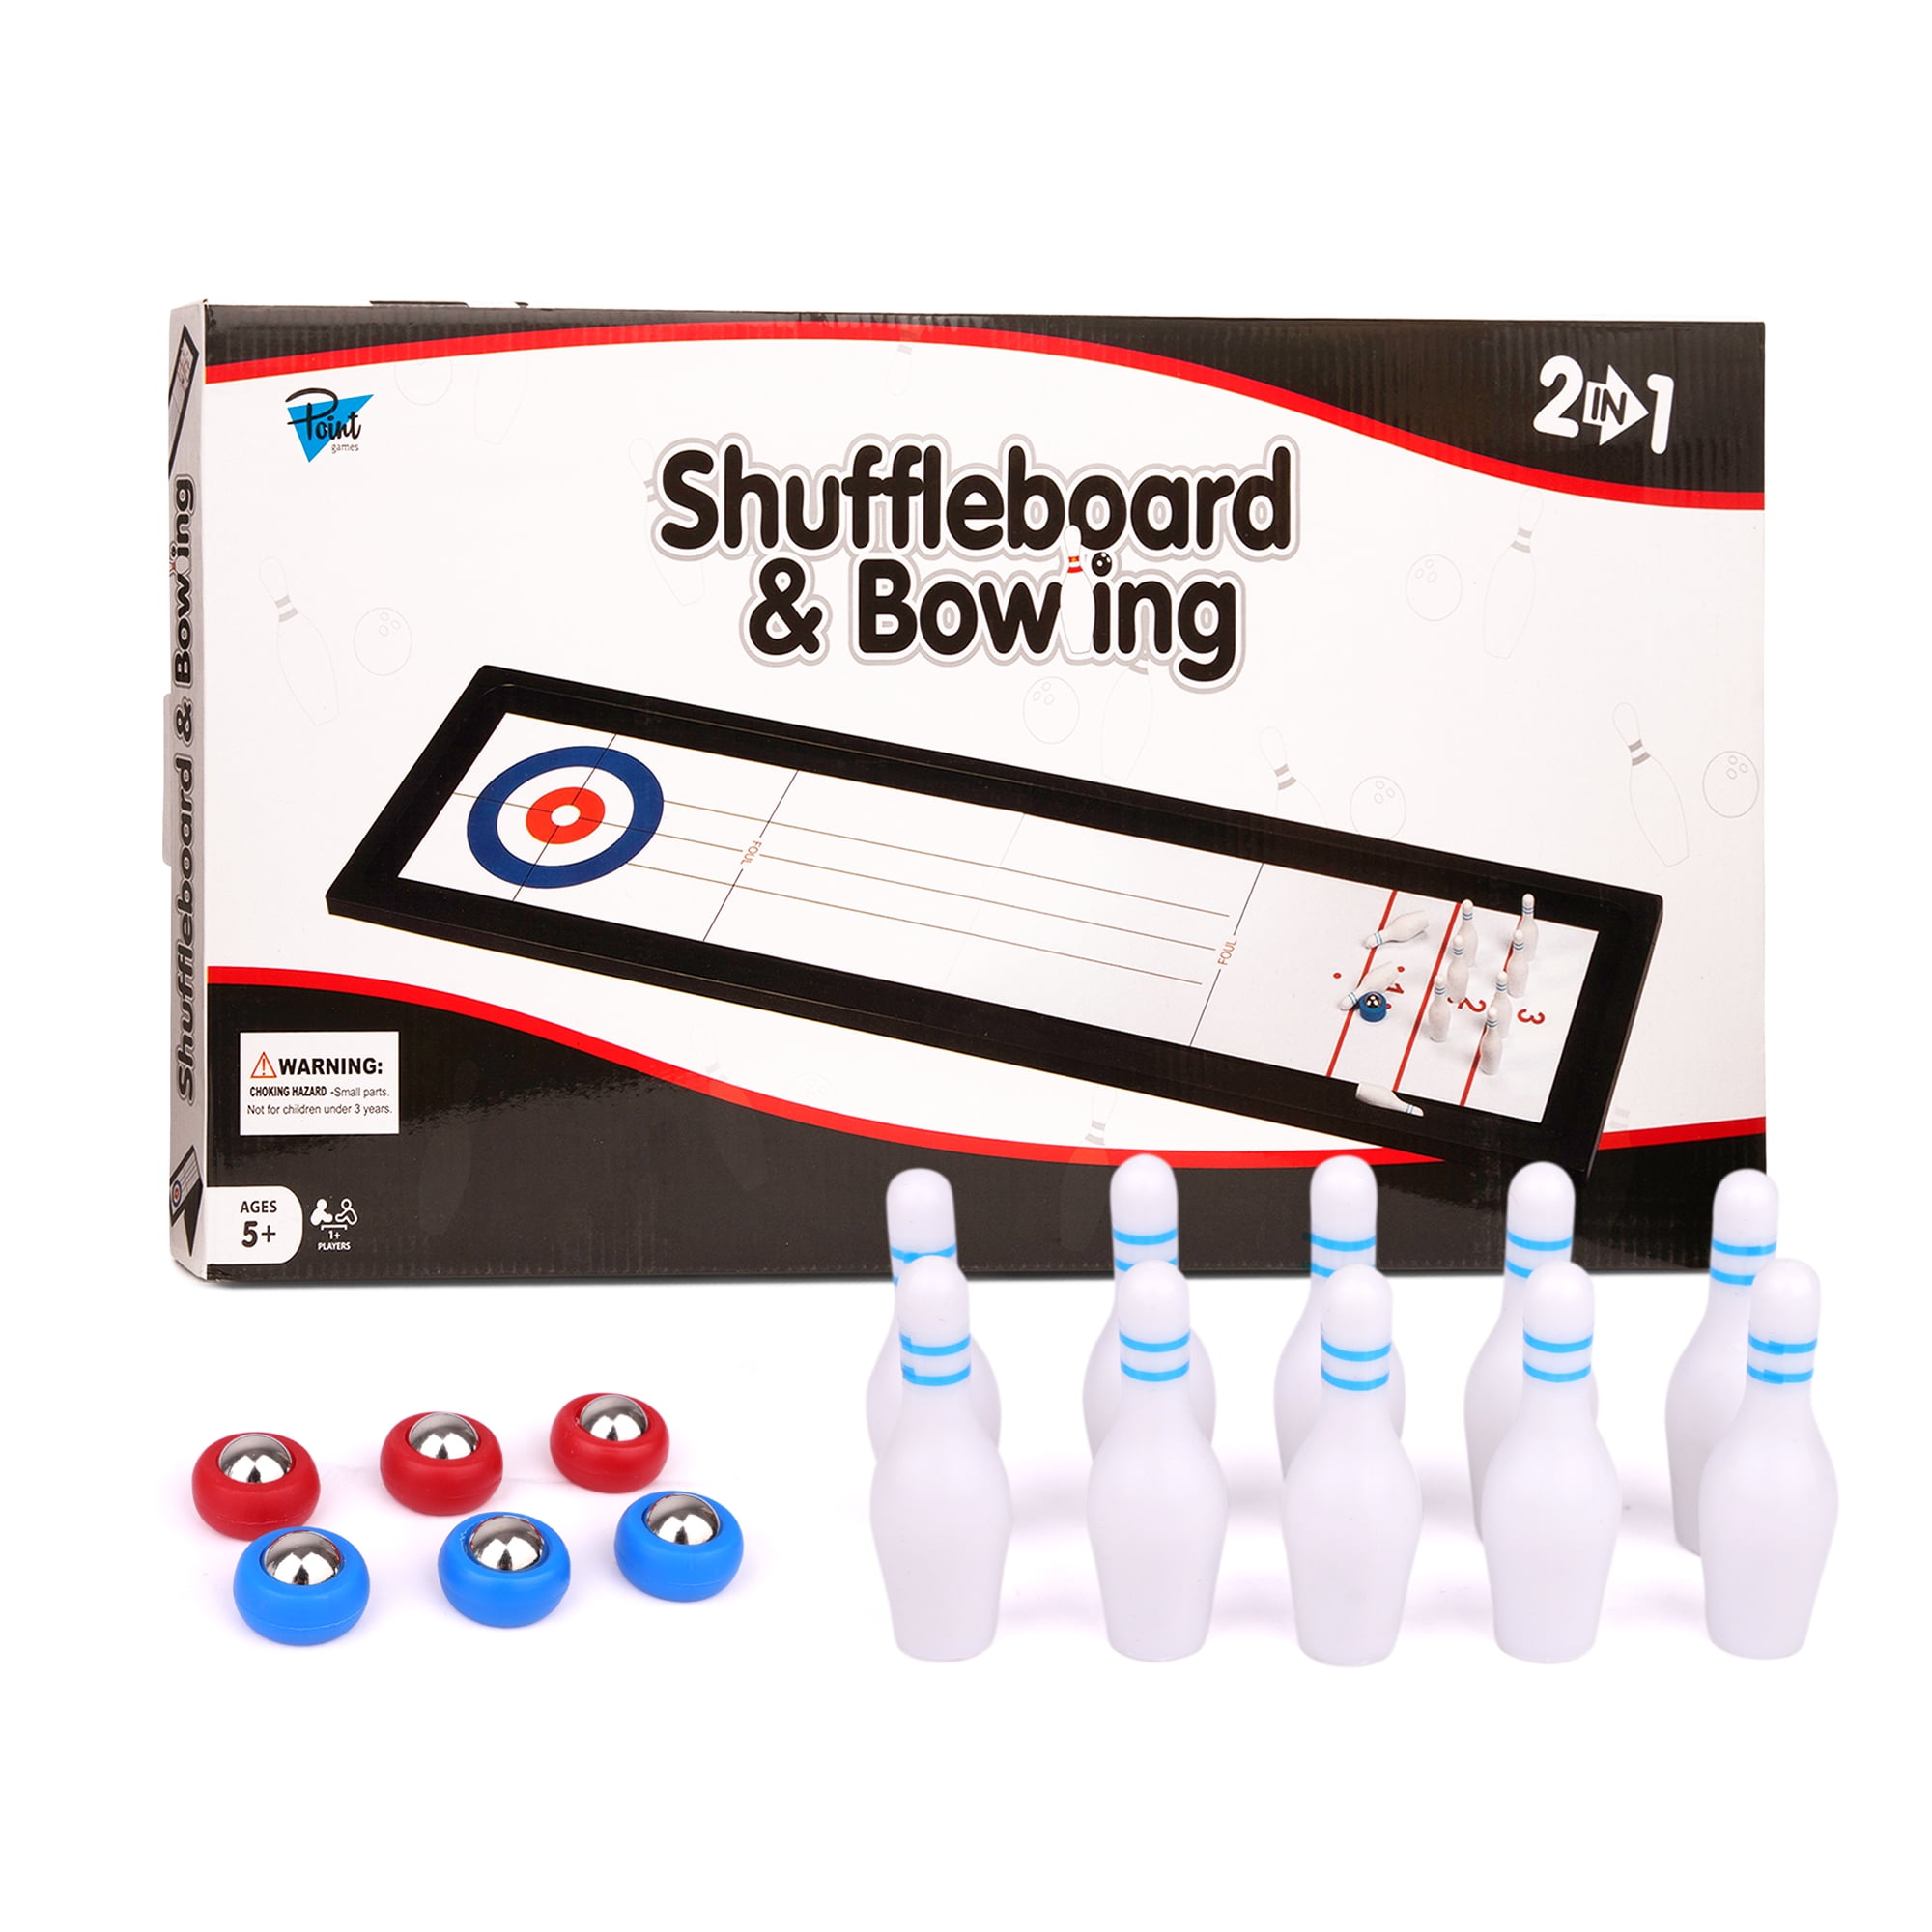  Shuffleboard Curling Bowling 3 in 1 Board Games Blue Orange 8  Rollers - Shuffleboard Pucks and Bowling Ball and Curling Games, Mini  Tabletop Game, Family Board Games Tabletop Family Fun